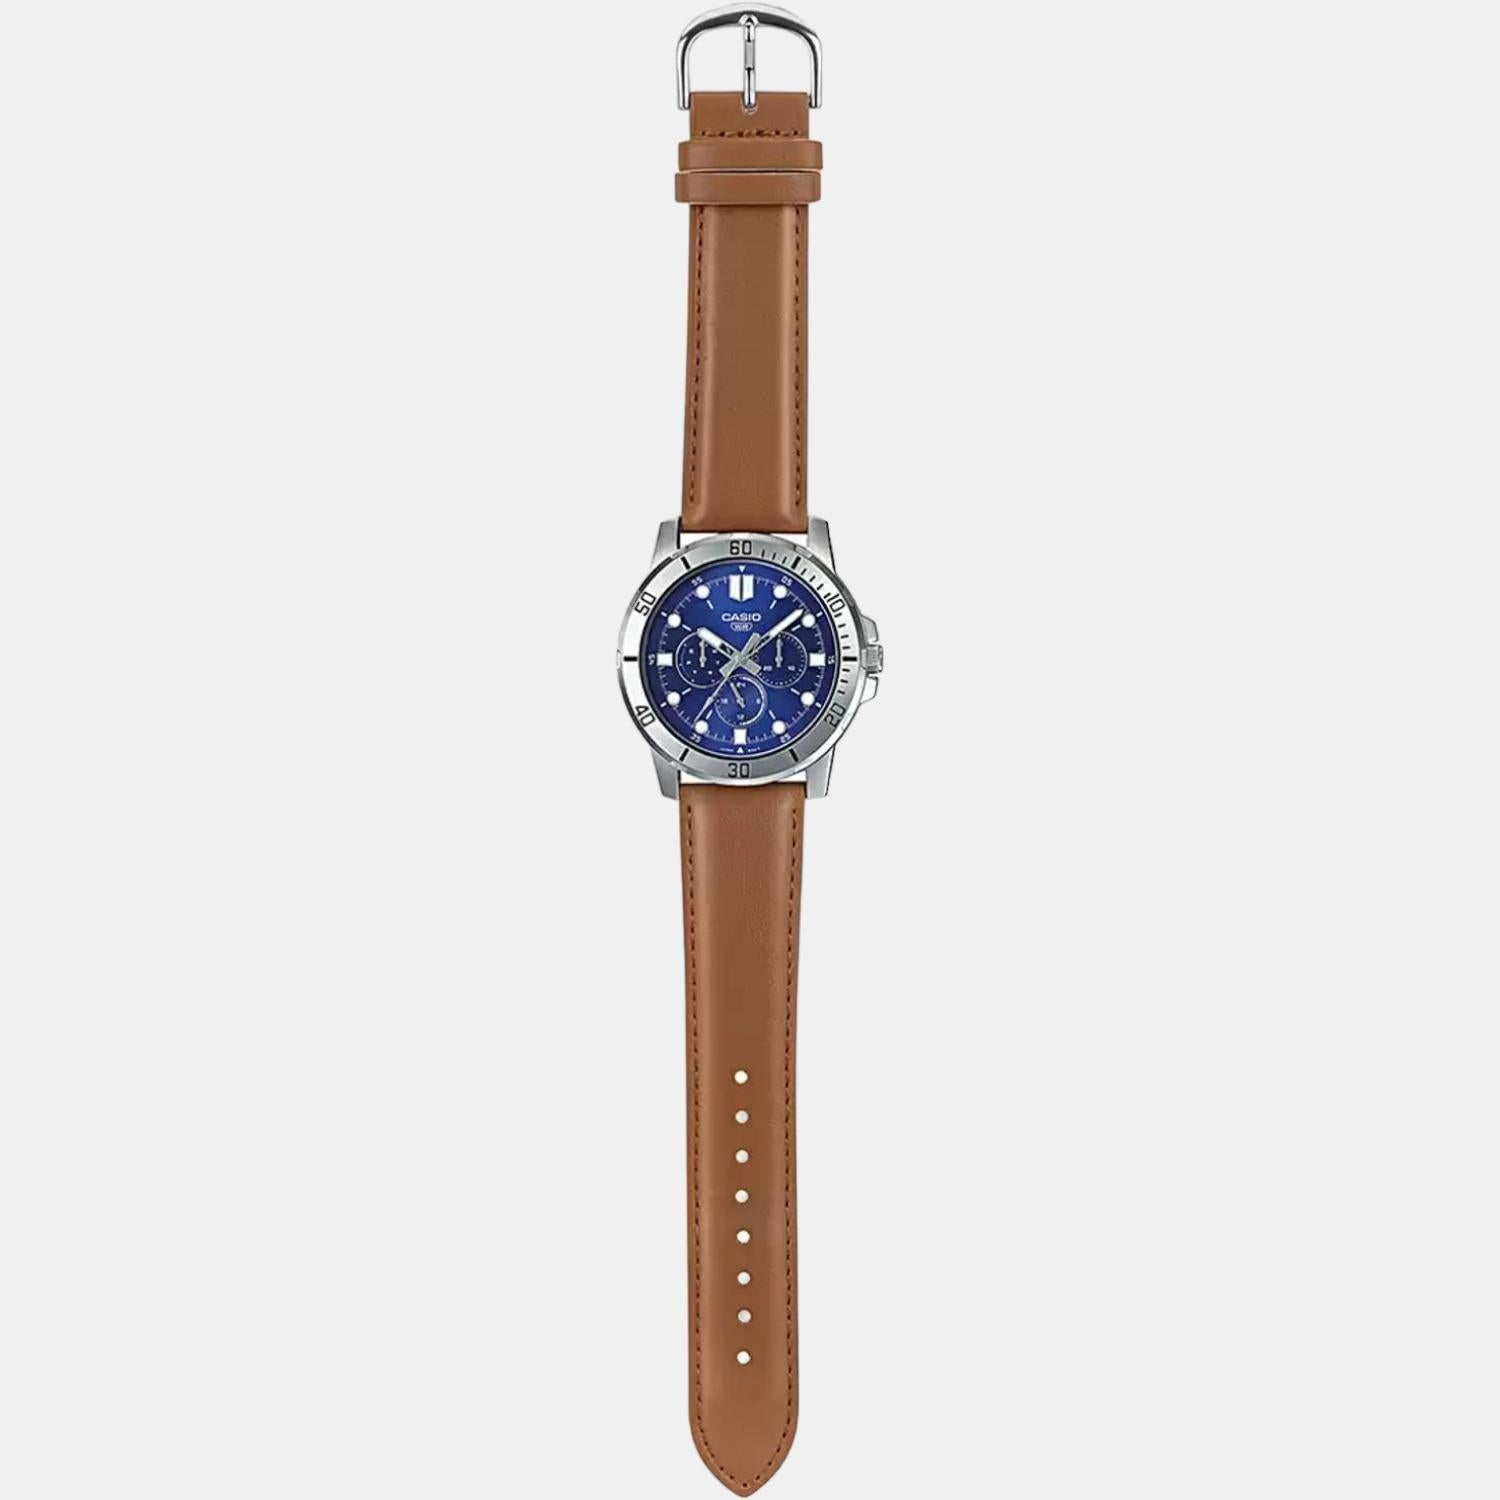 casio-stainless-steel-blue-analog-men-watch-a1752